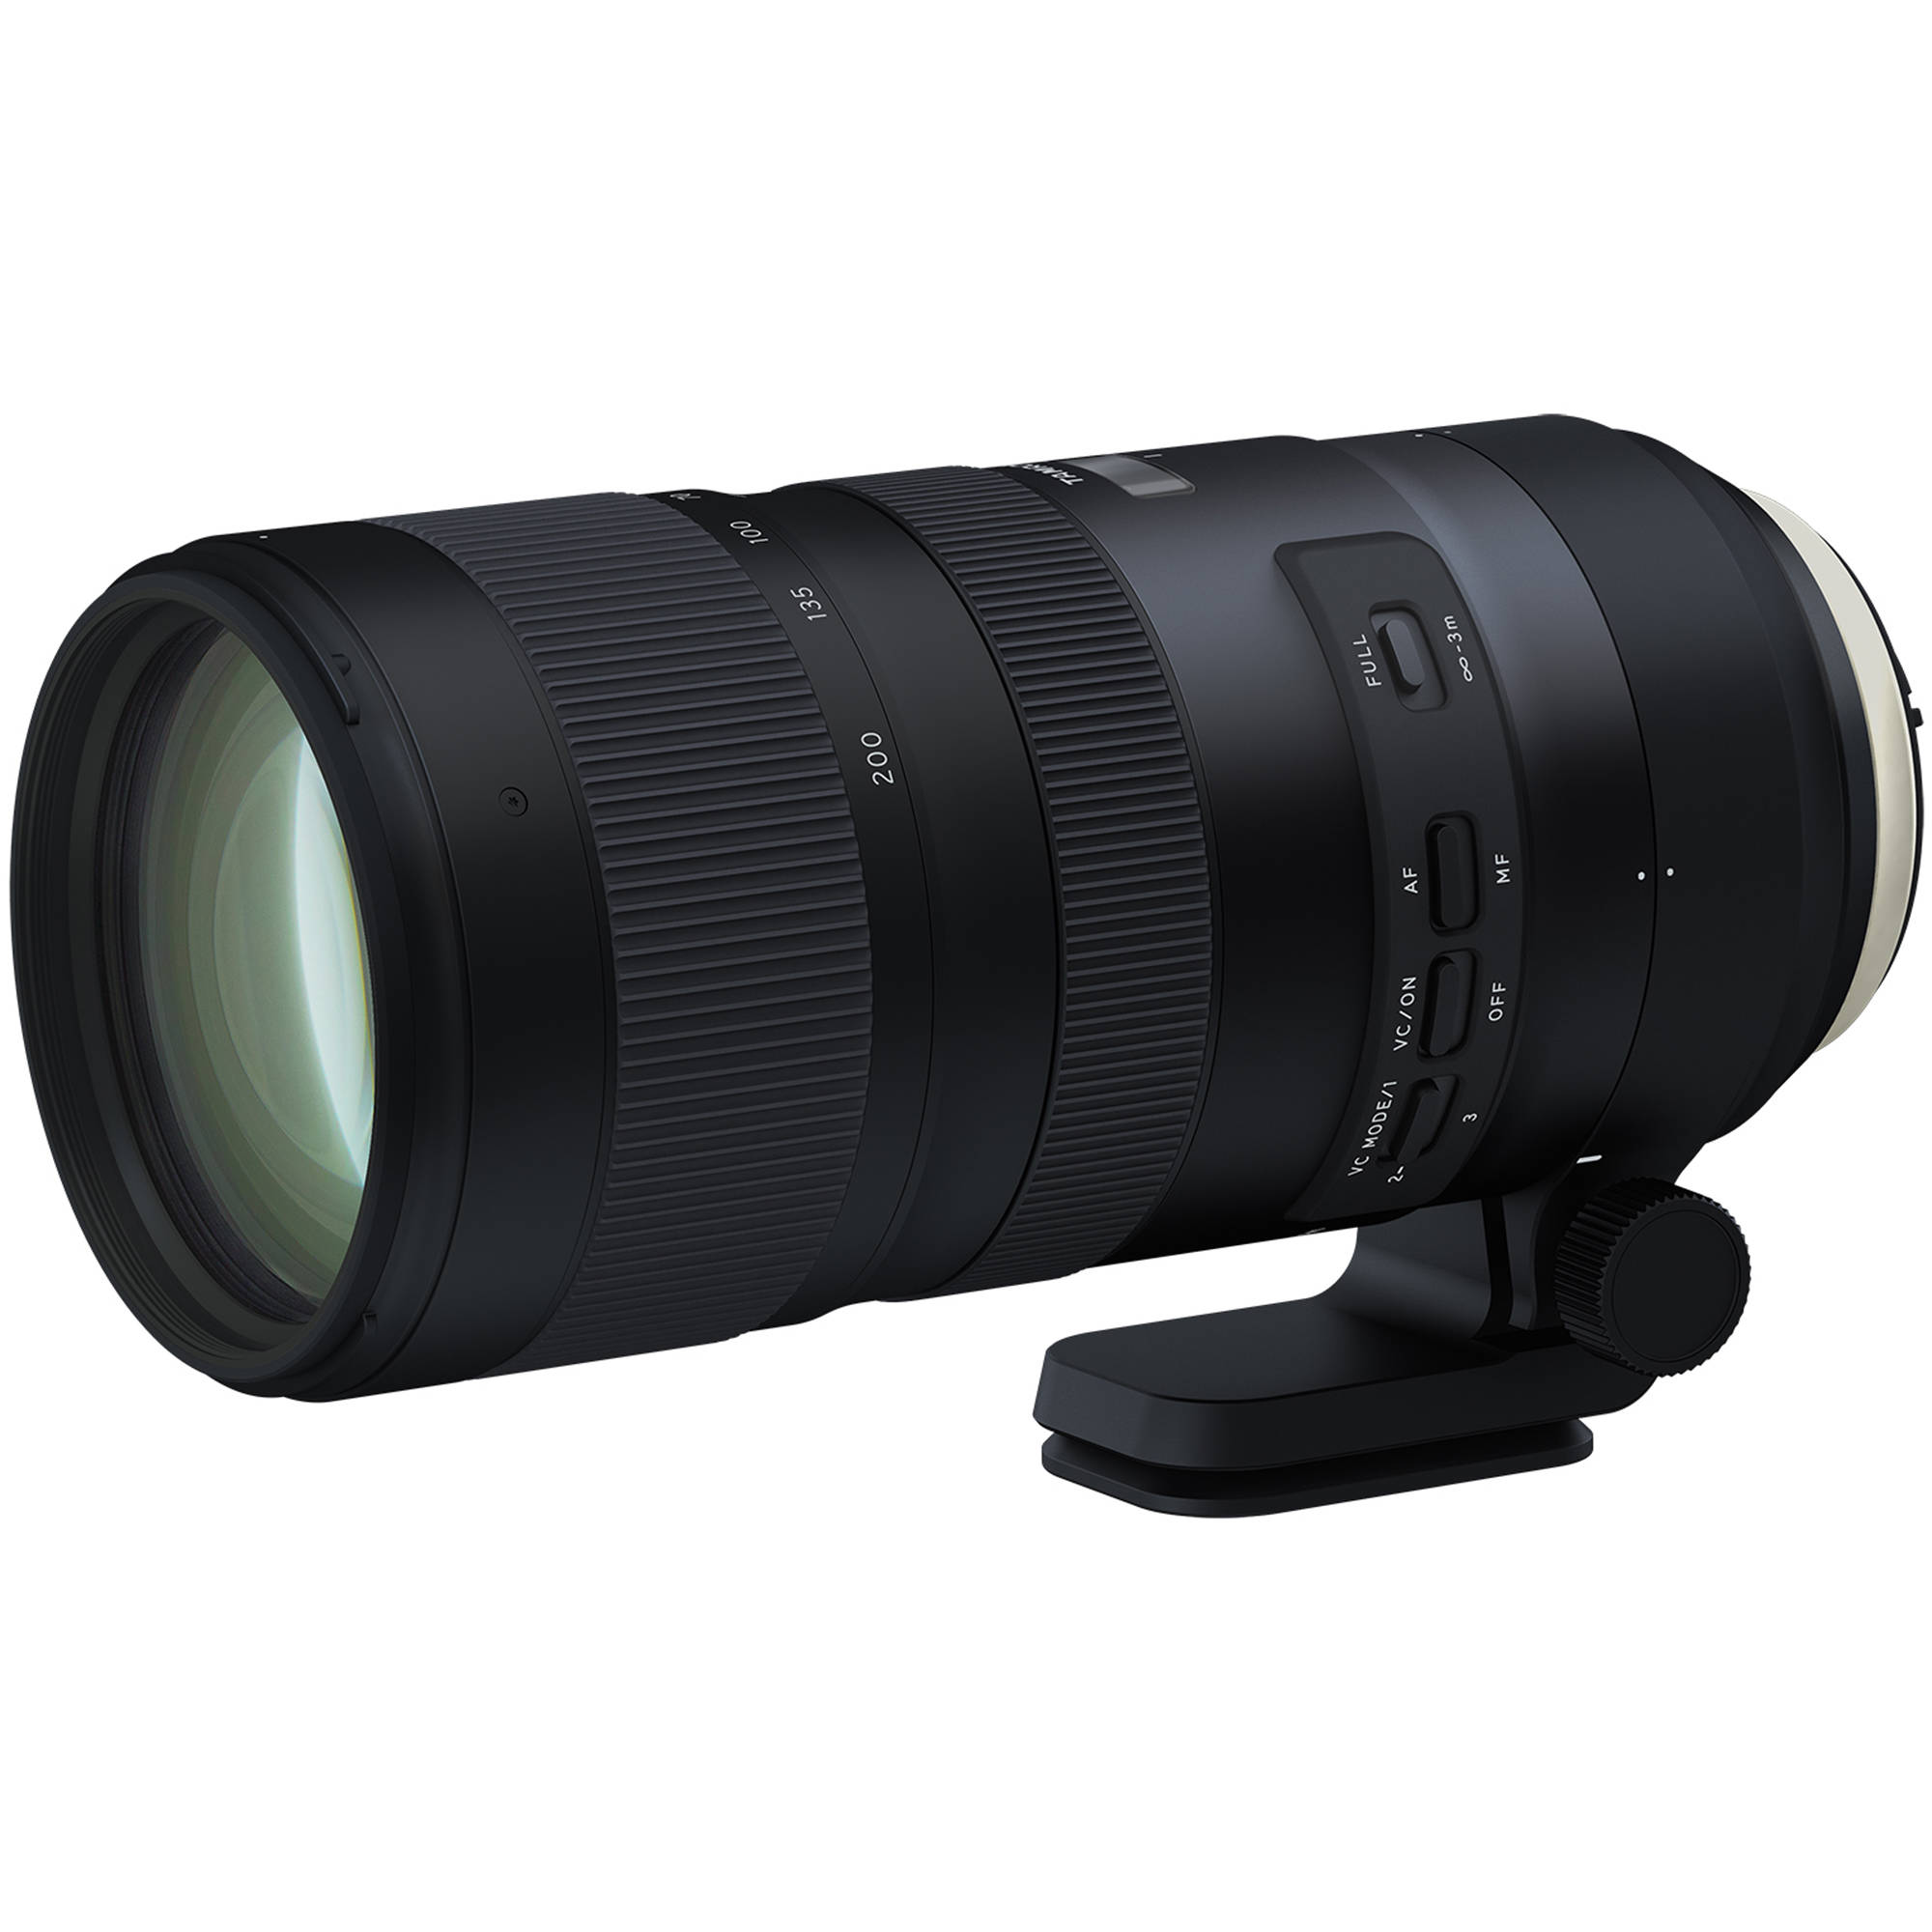 Tamron SP 70-200mm f/2.8 Di VC USD G2 Lens for Nikon F - The Camerashop